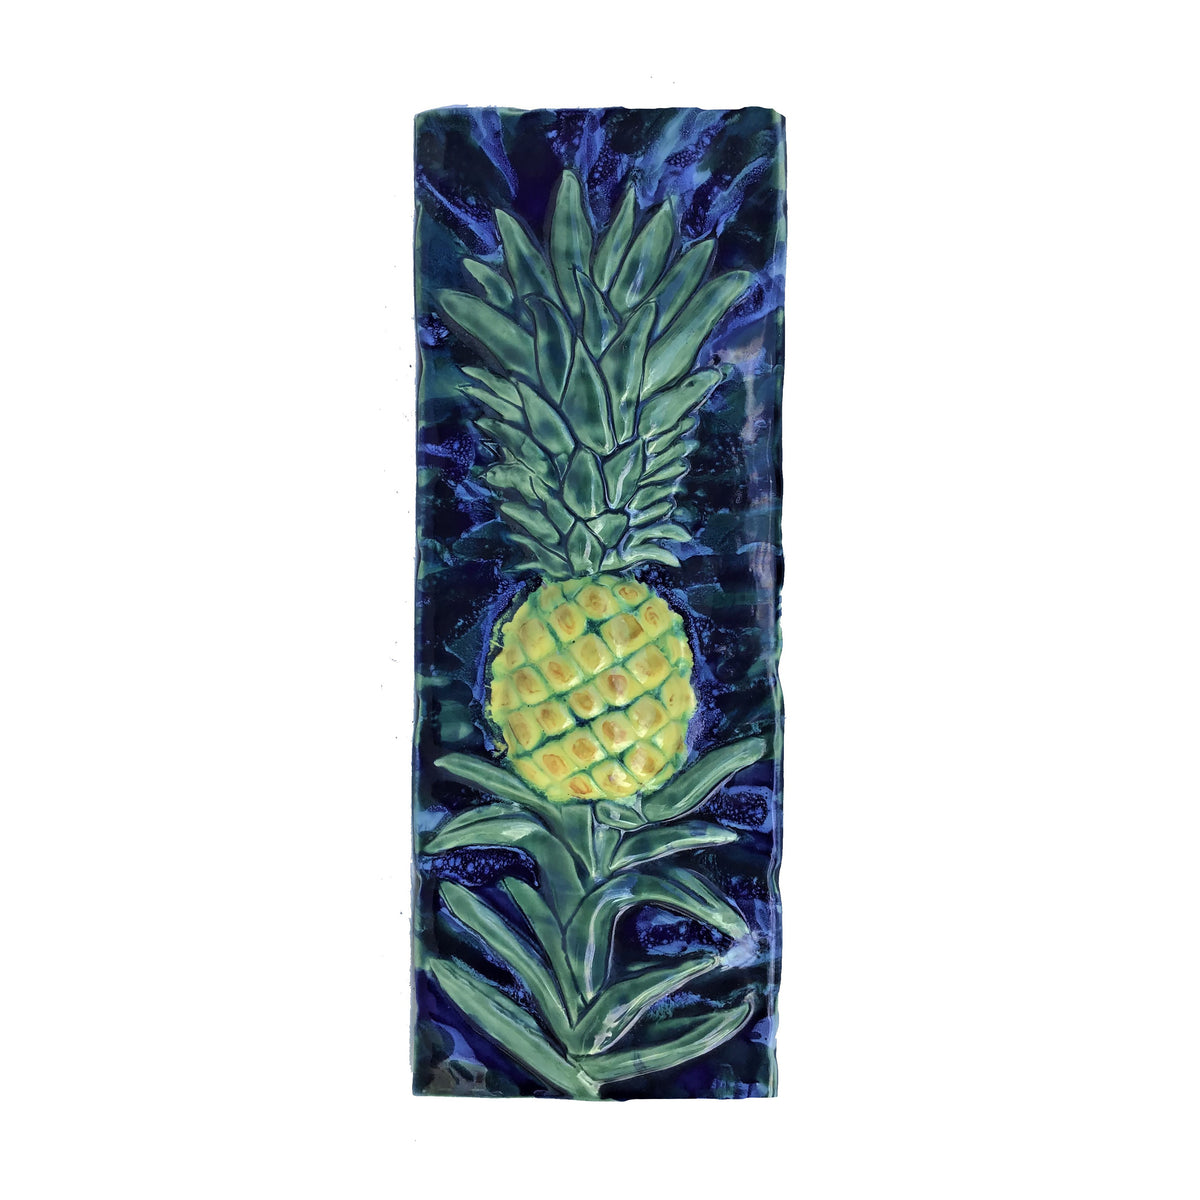 Hawaiian Pineapple Wall Hanging Art, Ceramic pineapple kitchen backsplash tile, ceramic tile